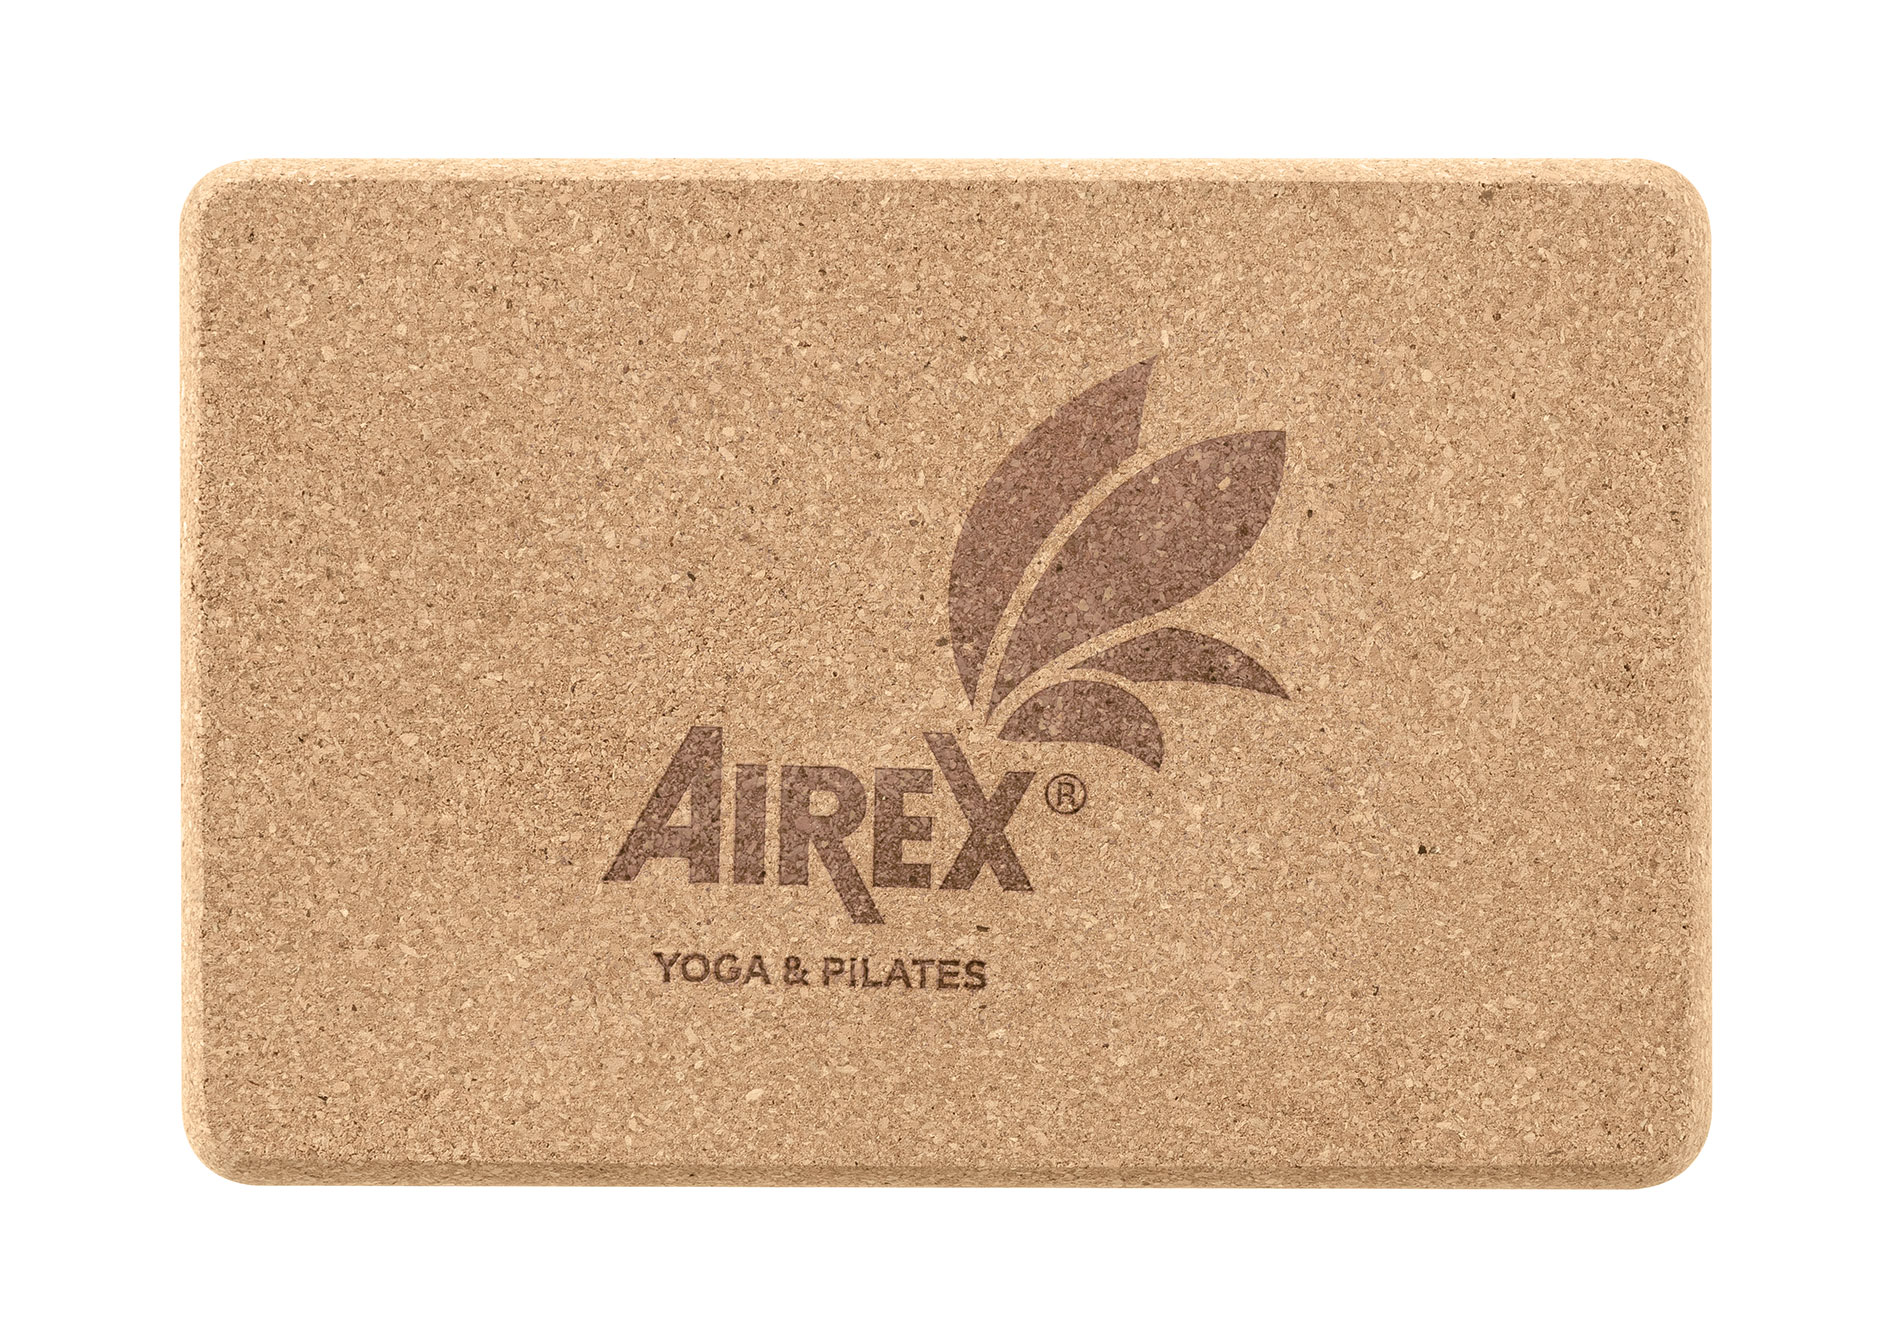 Airex Yoga Eco Blok - kurk - 22,5 x 15 x 7,4 cm